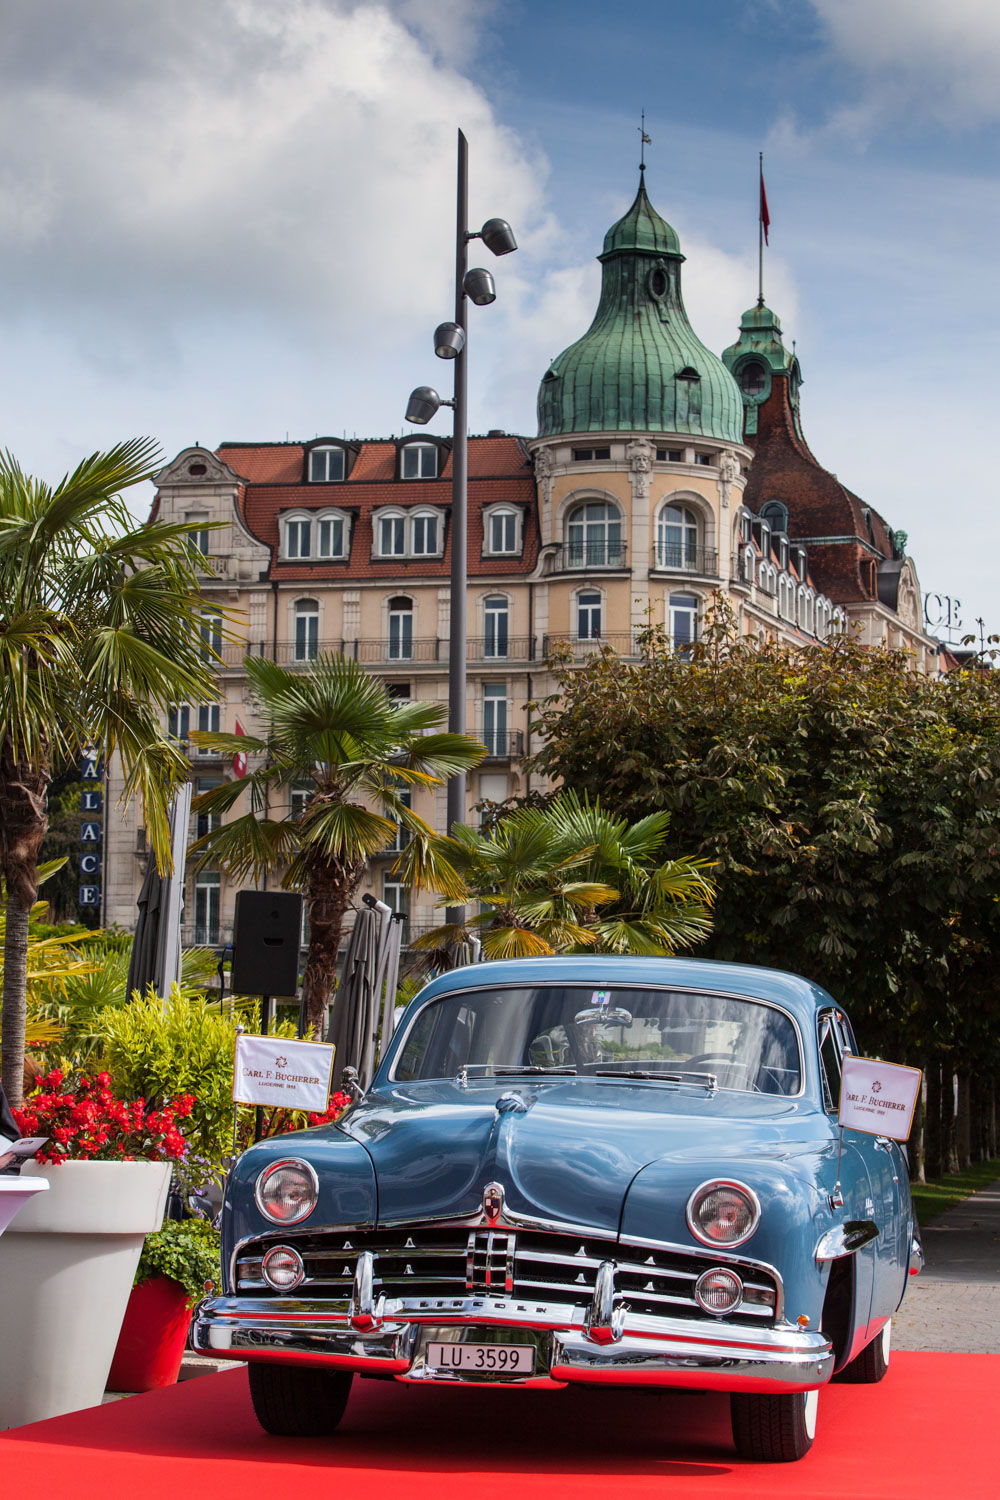 The restored blue Lincoln Cosmopolitan Town Car